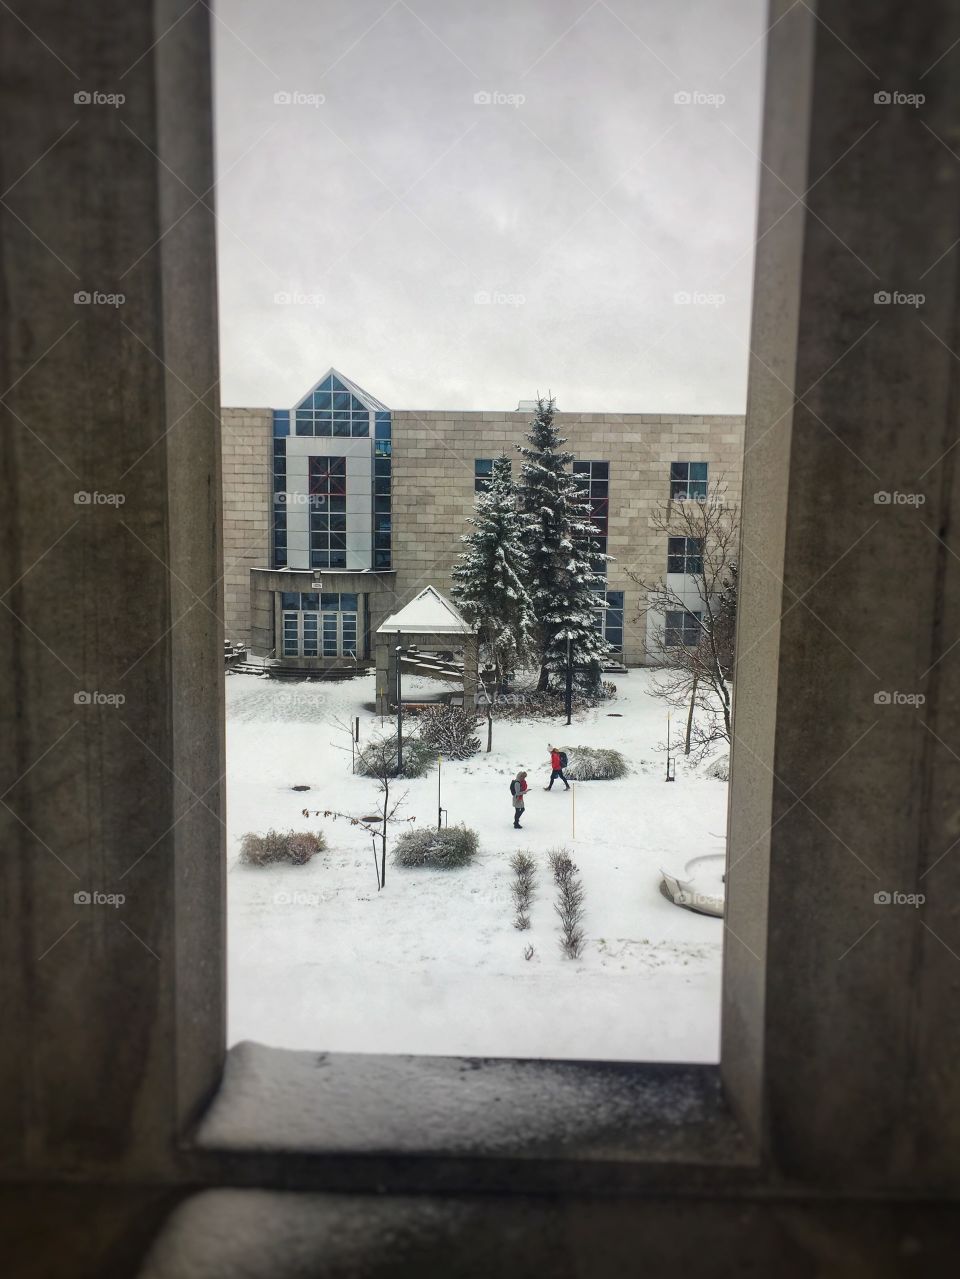 University in winter 